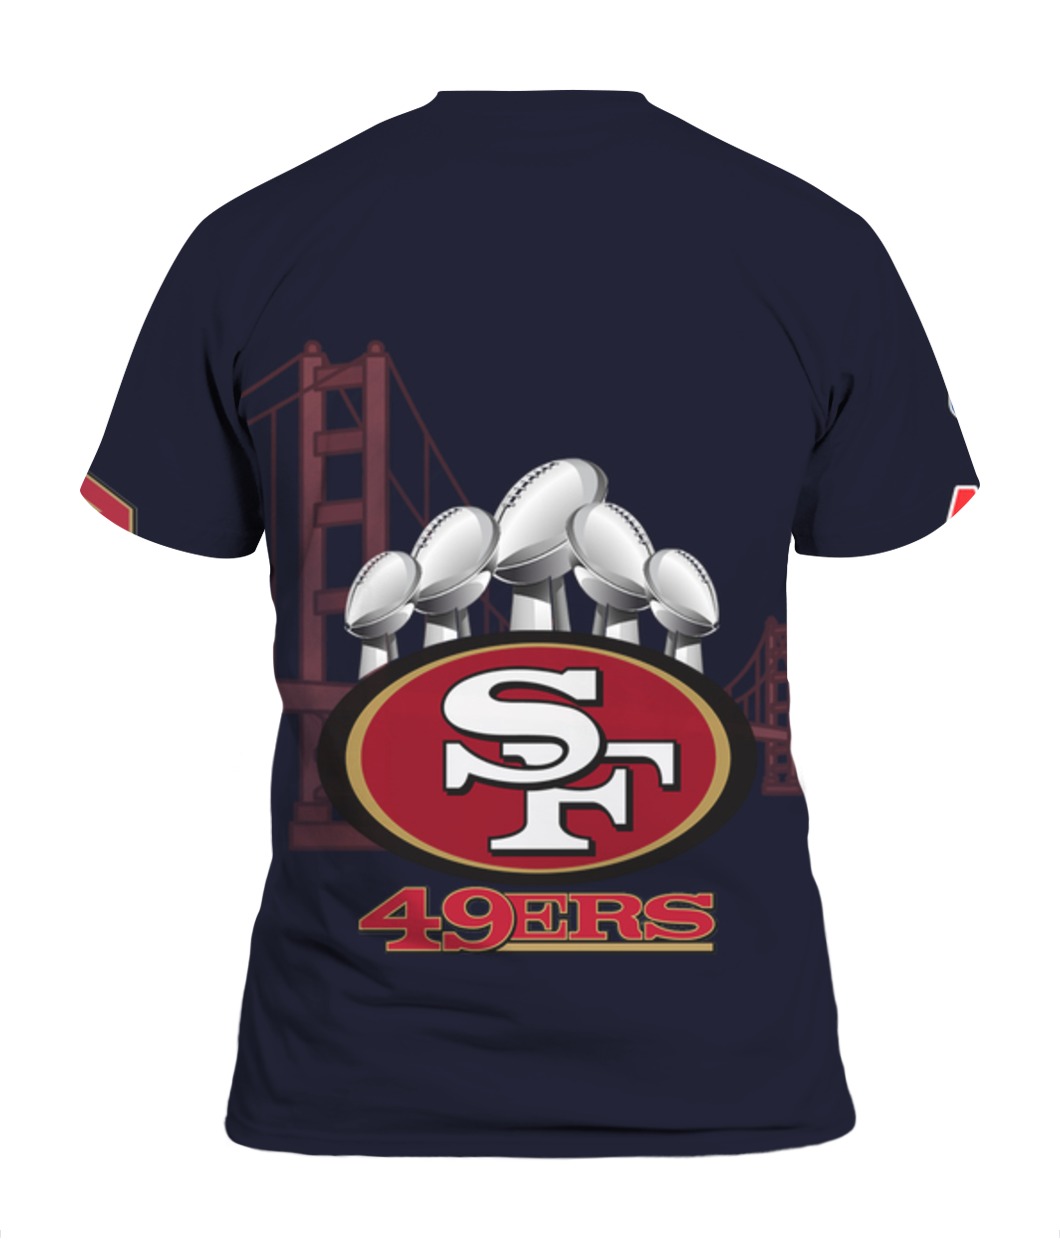 San francisco 49ers sourdough sam all over print tshirt - back